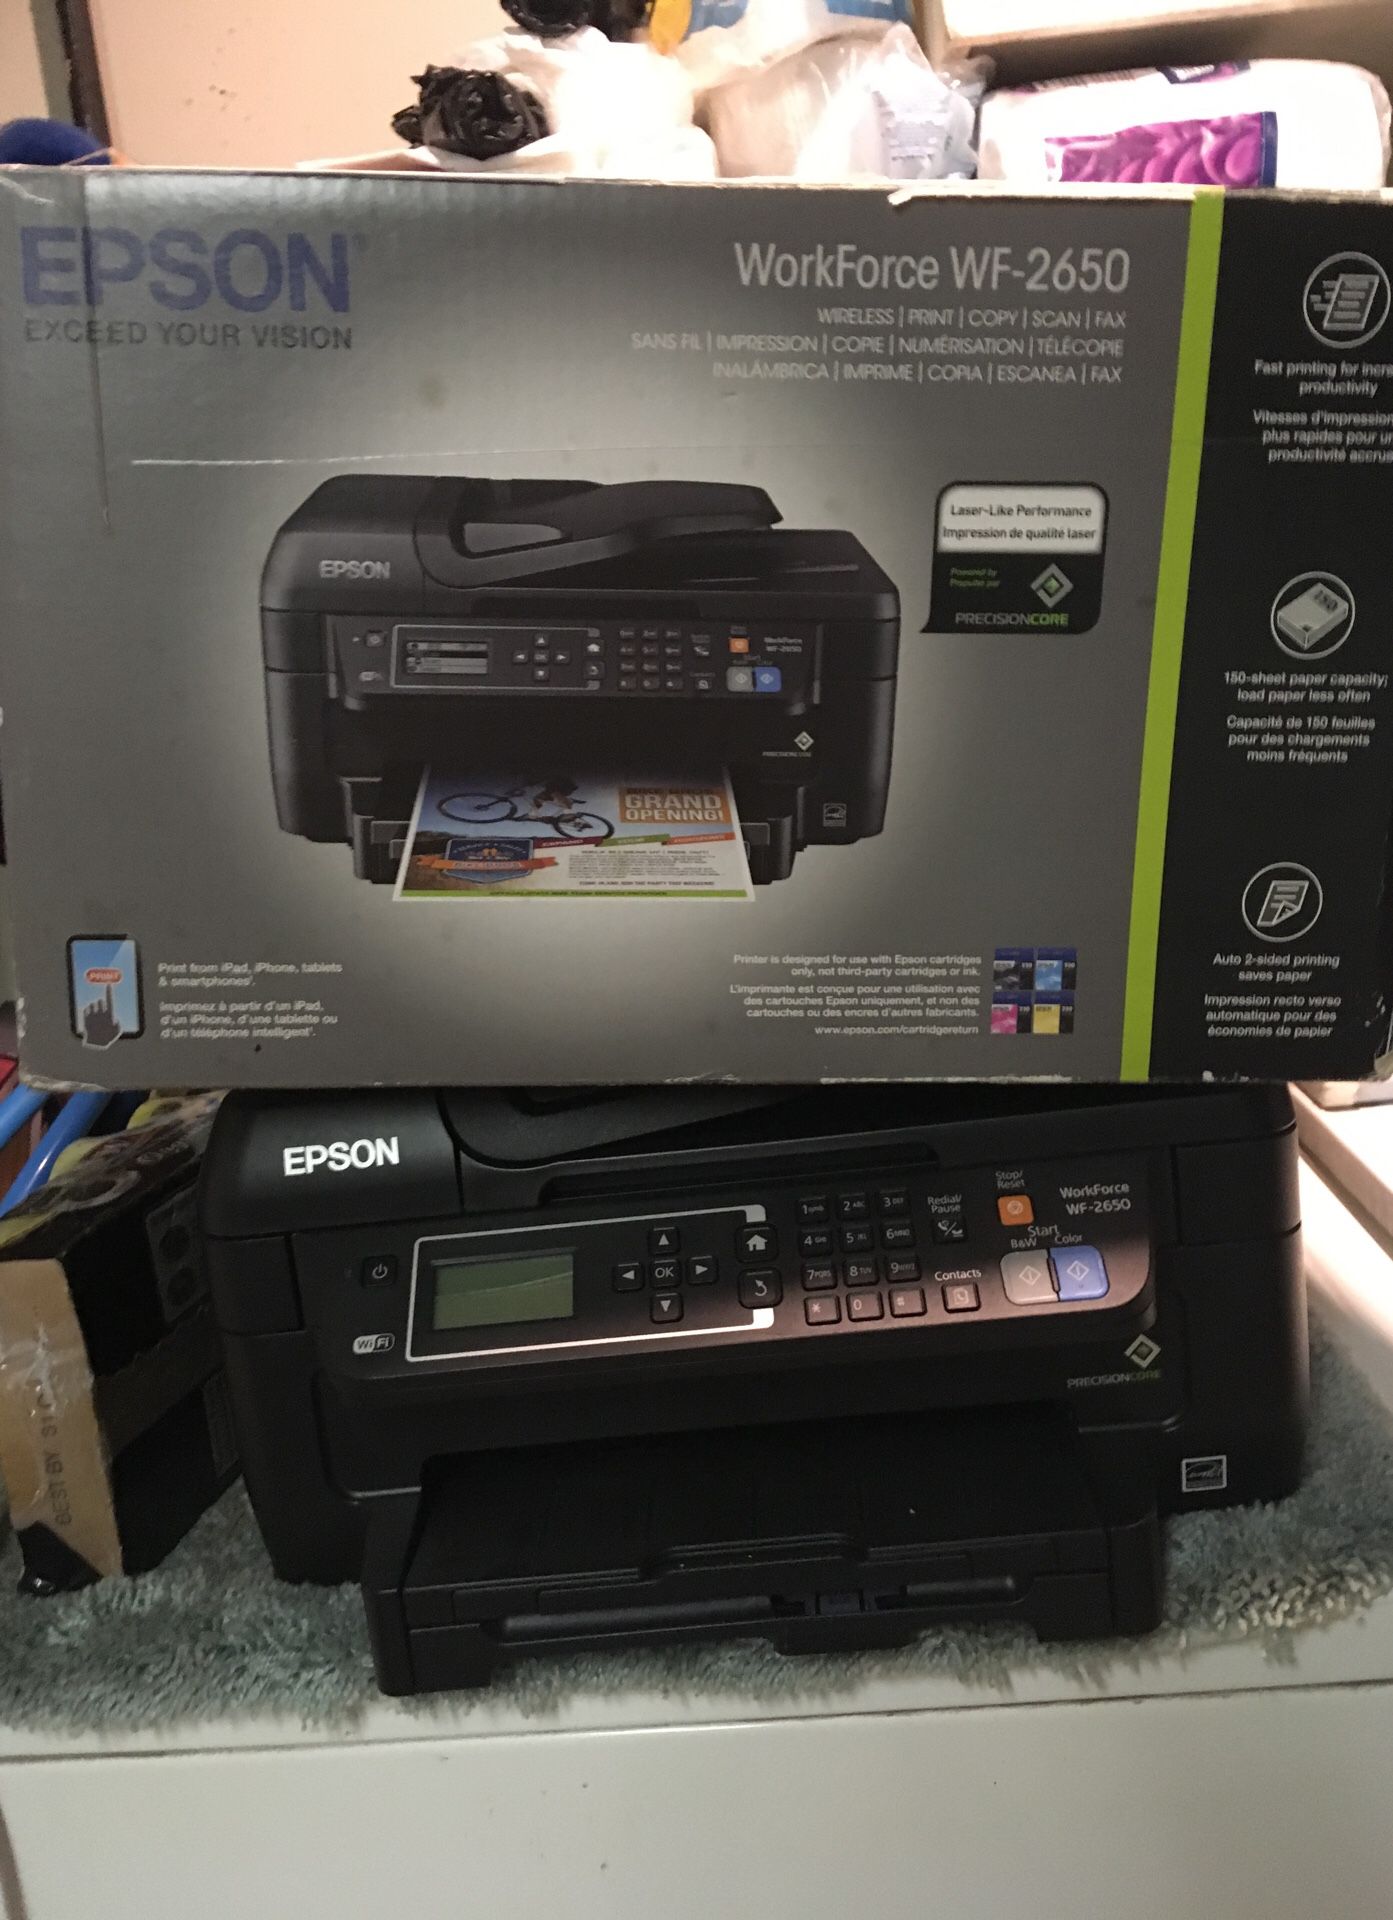 Edson Workforce WF-2650 Printer